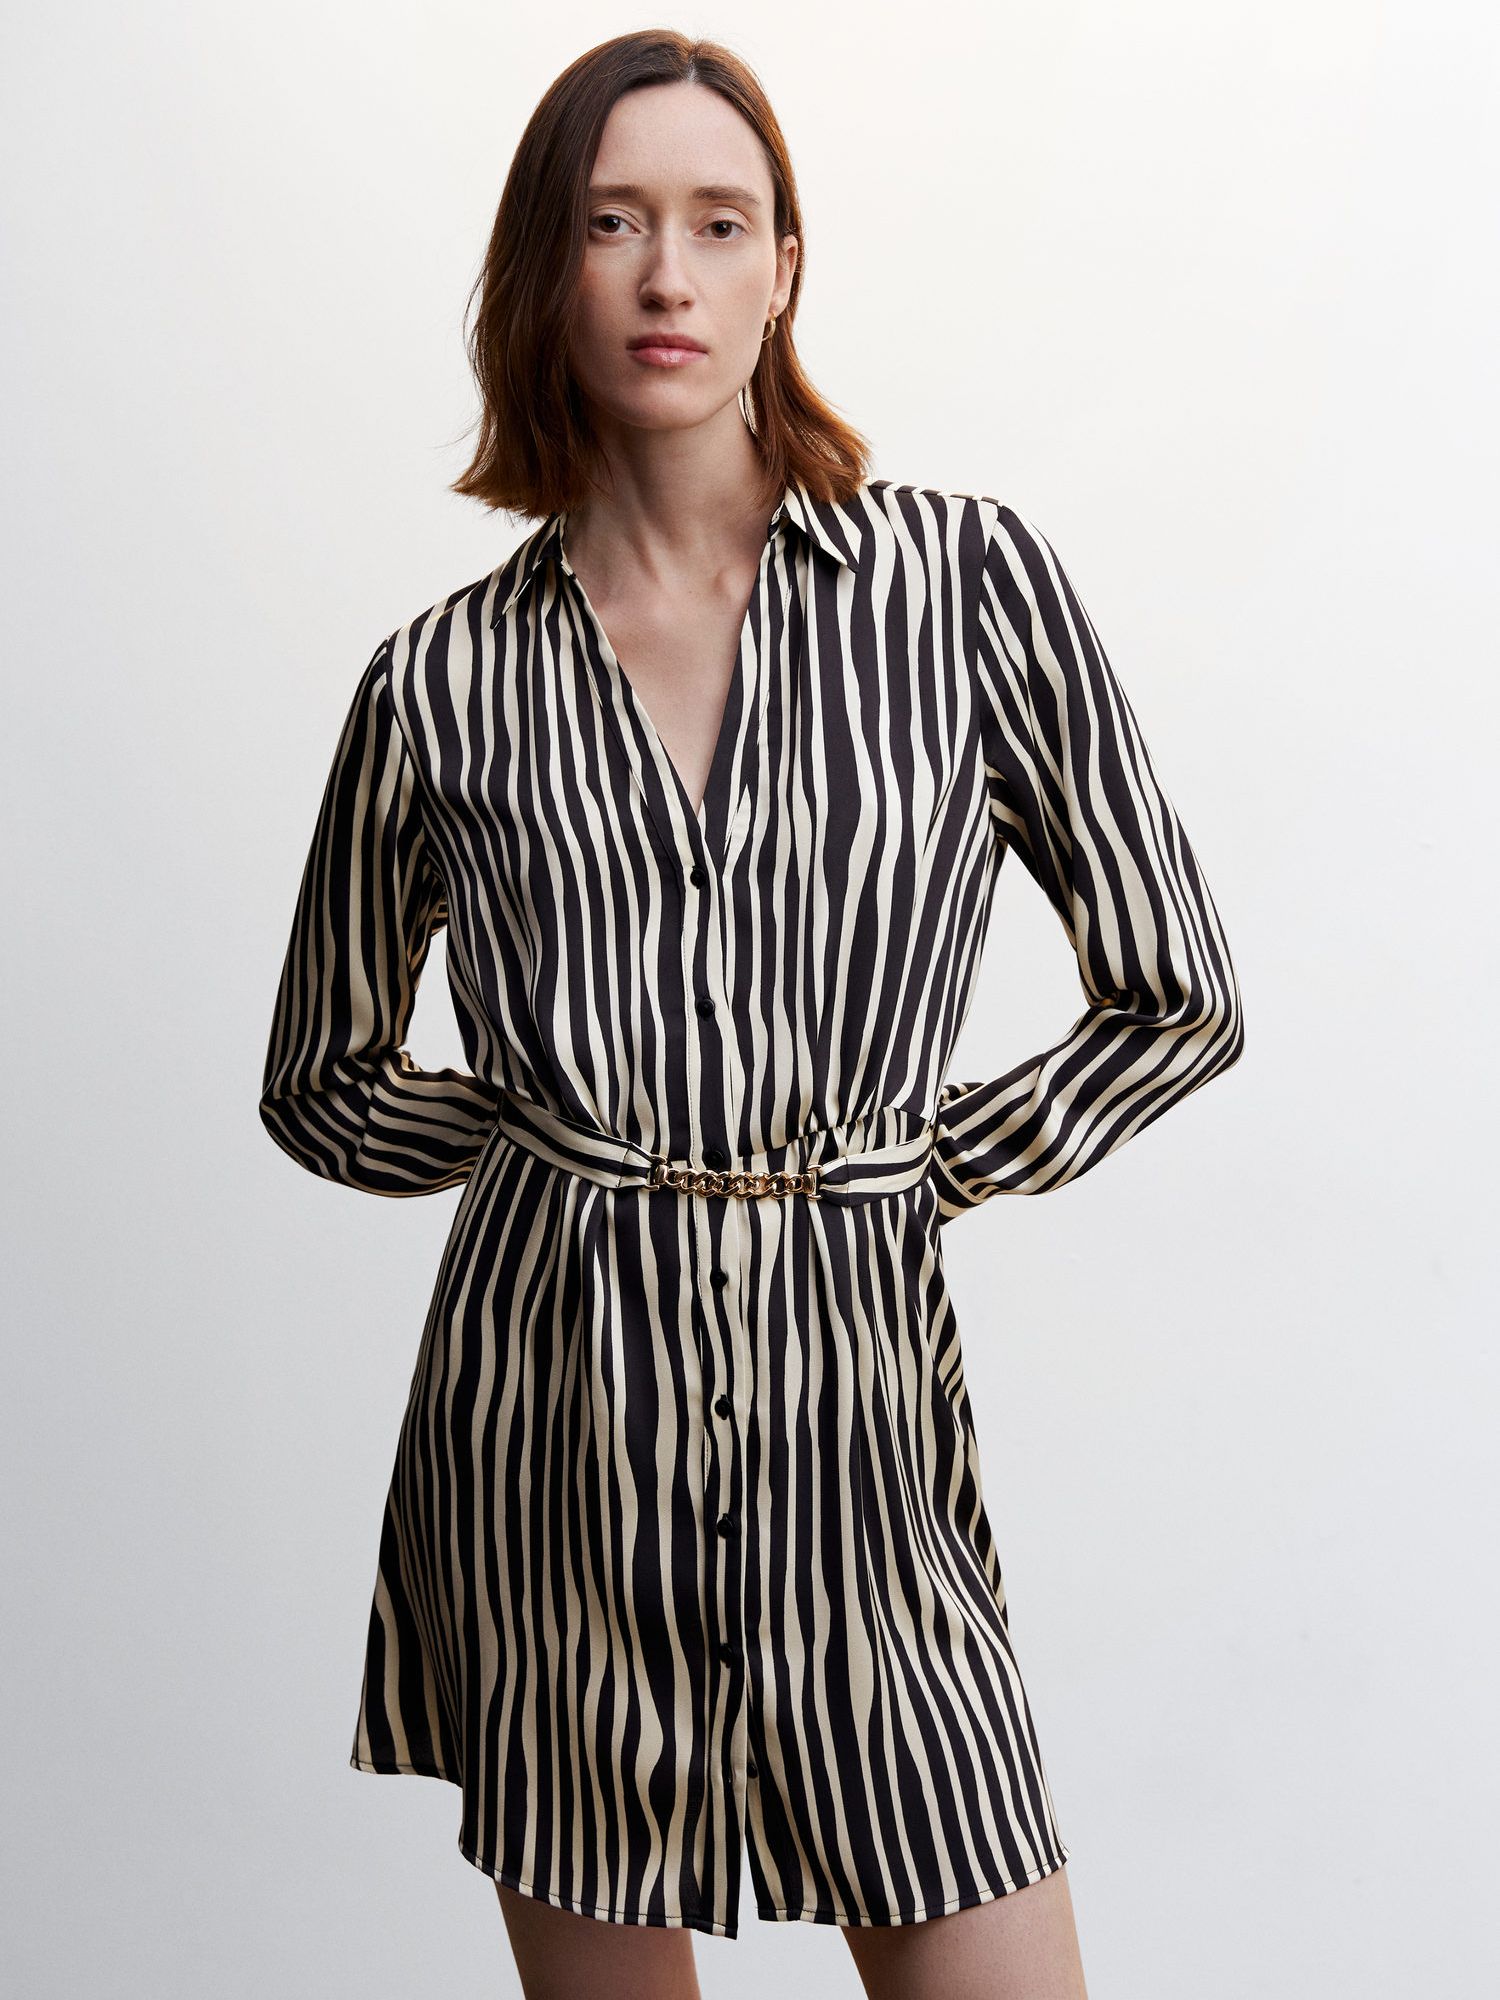 Mango Ninette Animal Stripe Satin Shirt Dress, Black/White, 8